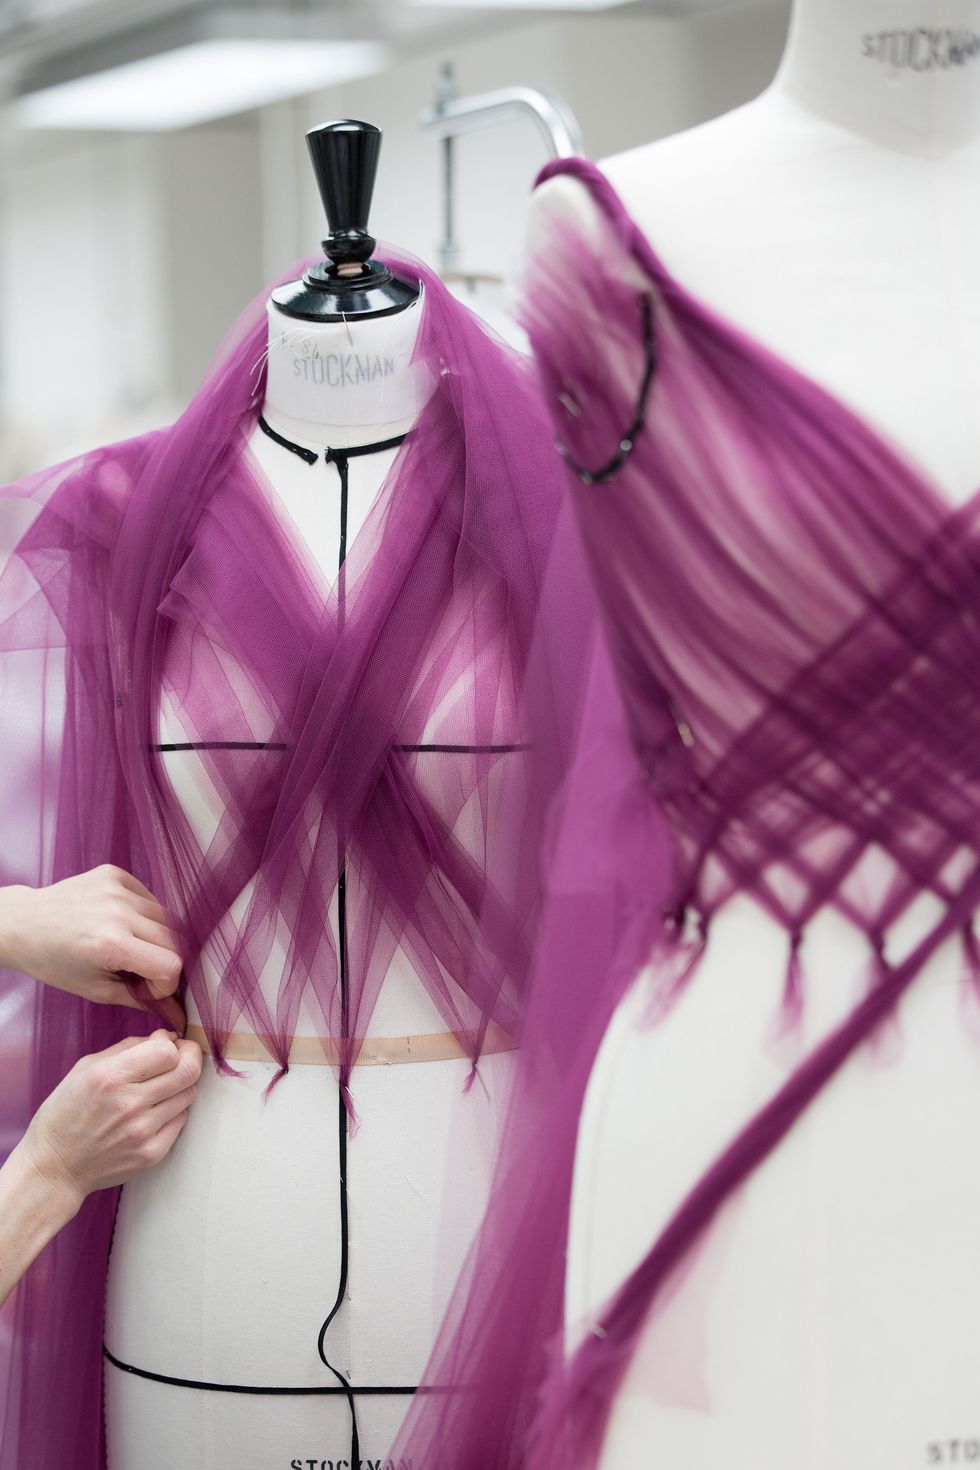 the making of anya taylorjoy's critics' choice dior dress